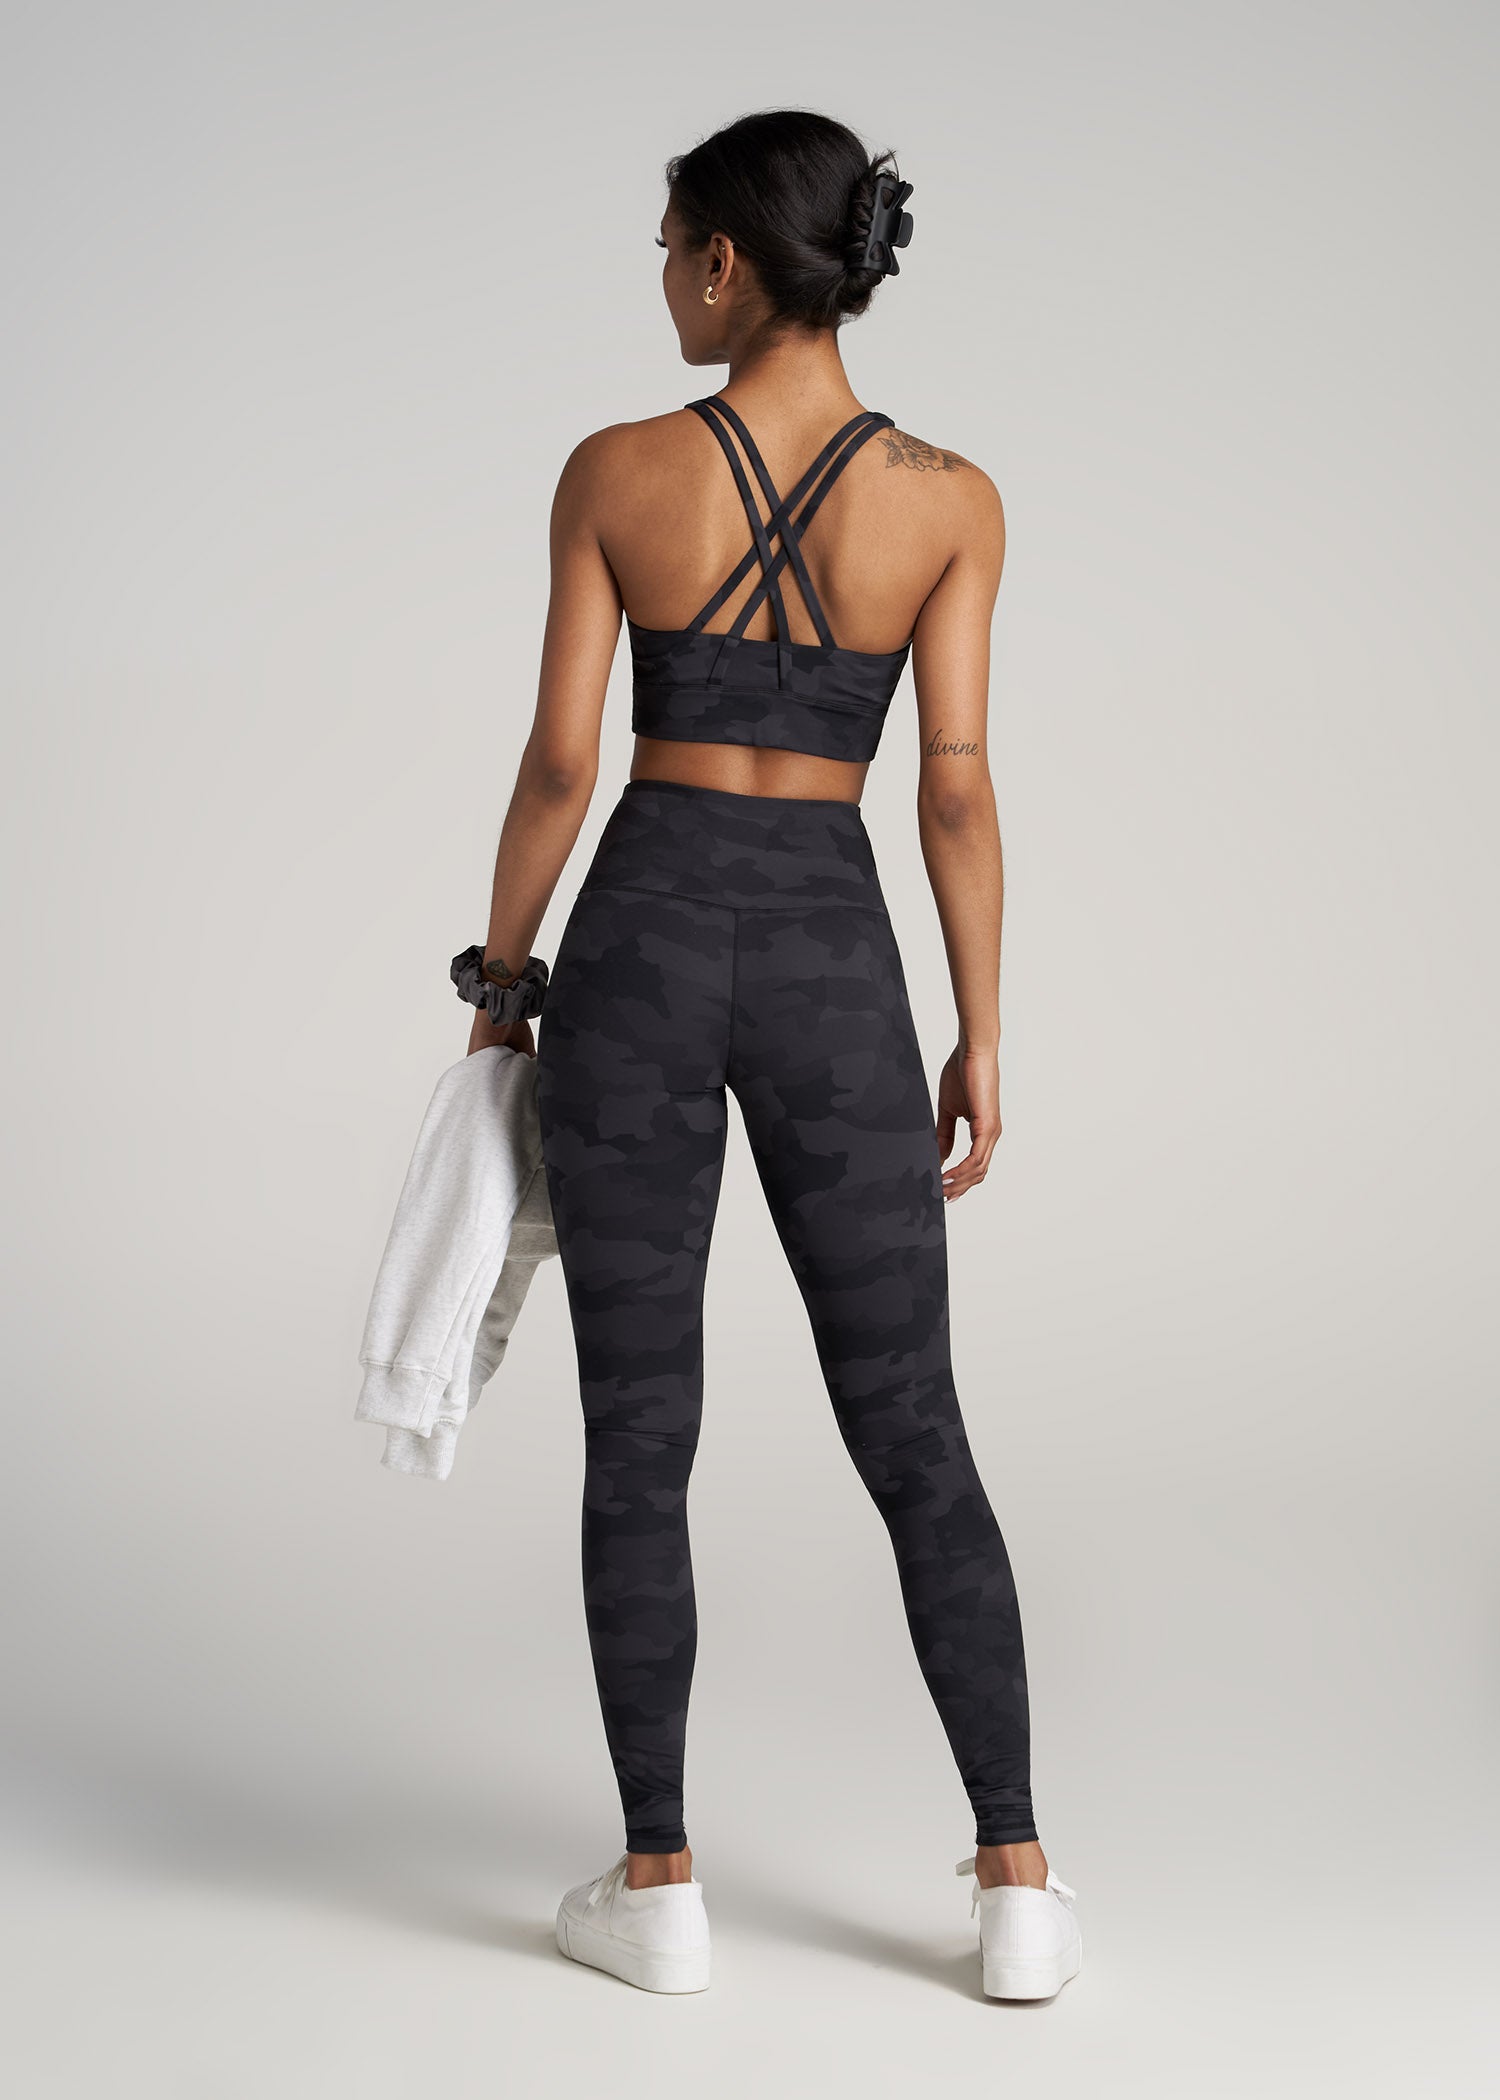 Nike Criss-Cross Sports Bra Gray - $16 - From Amy